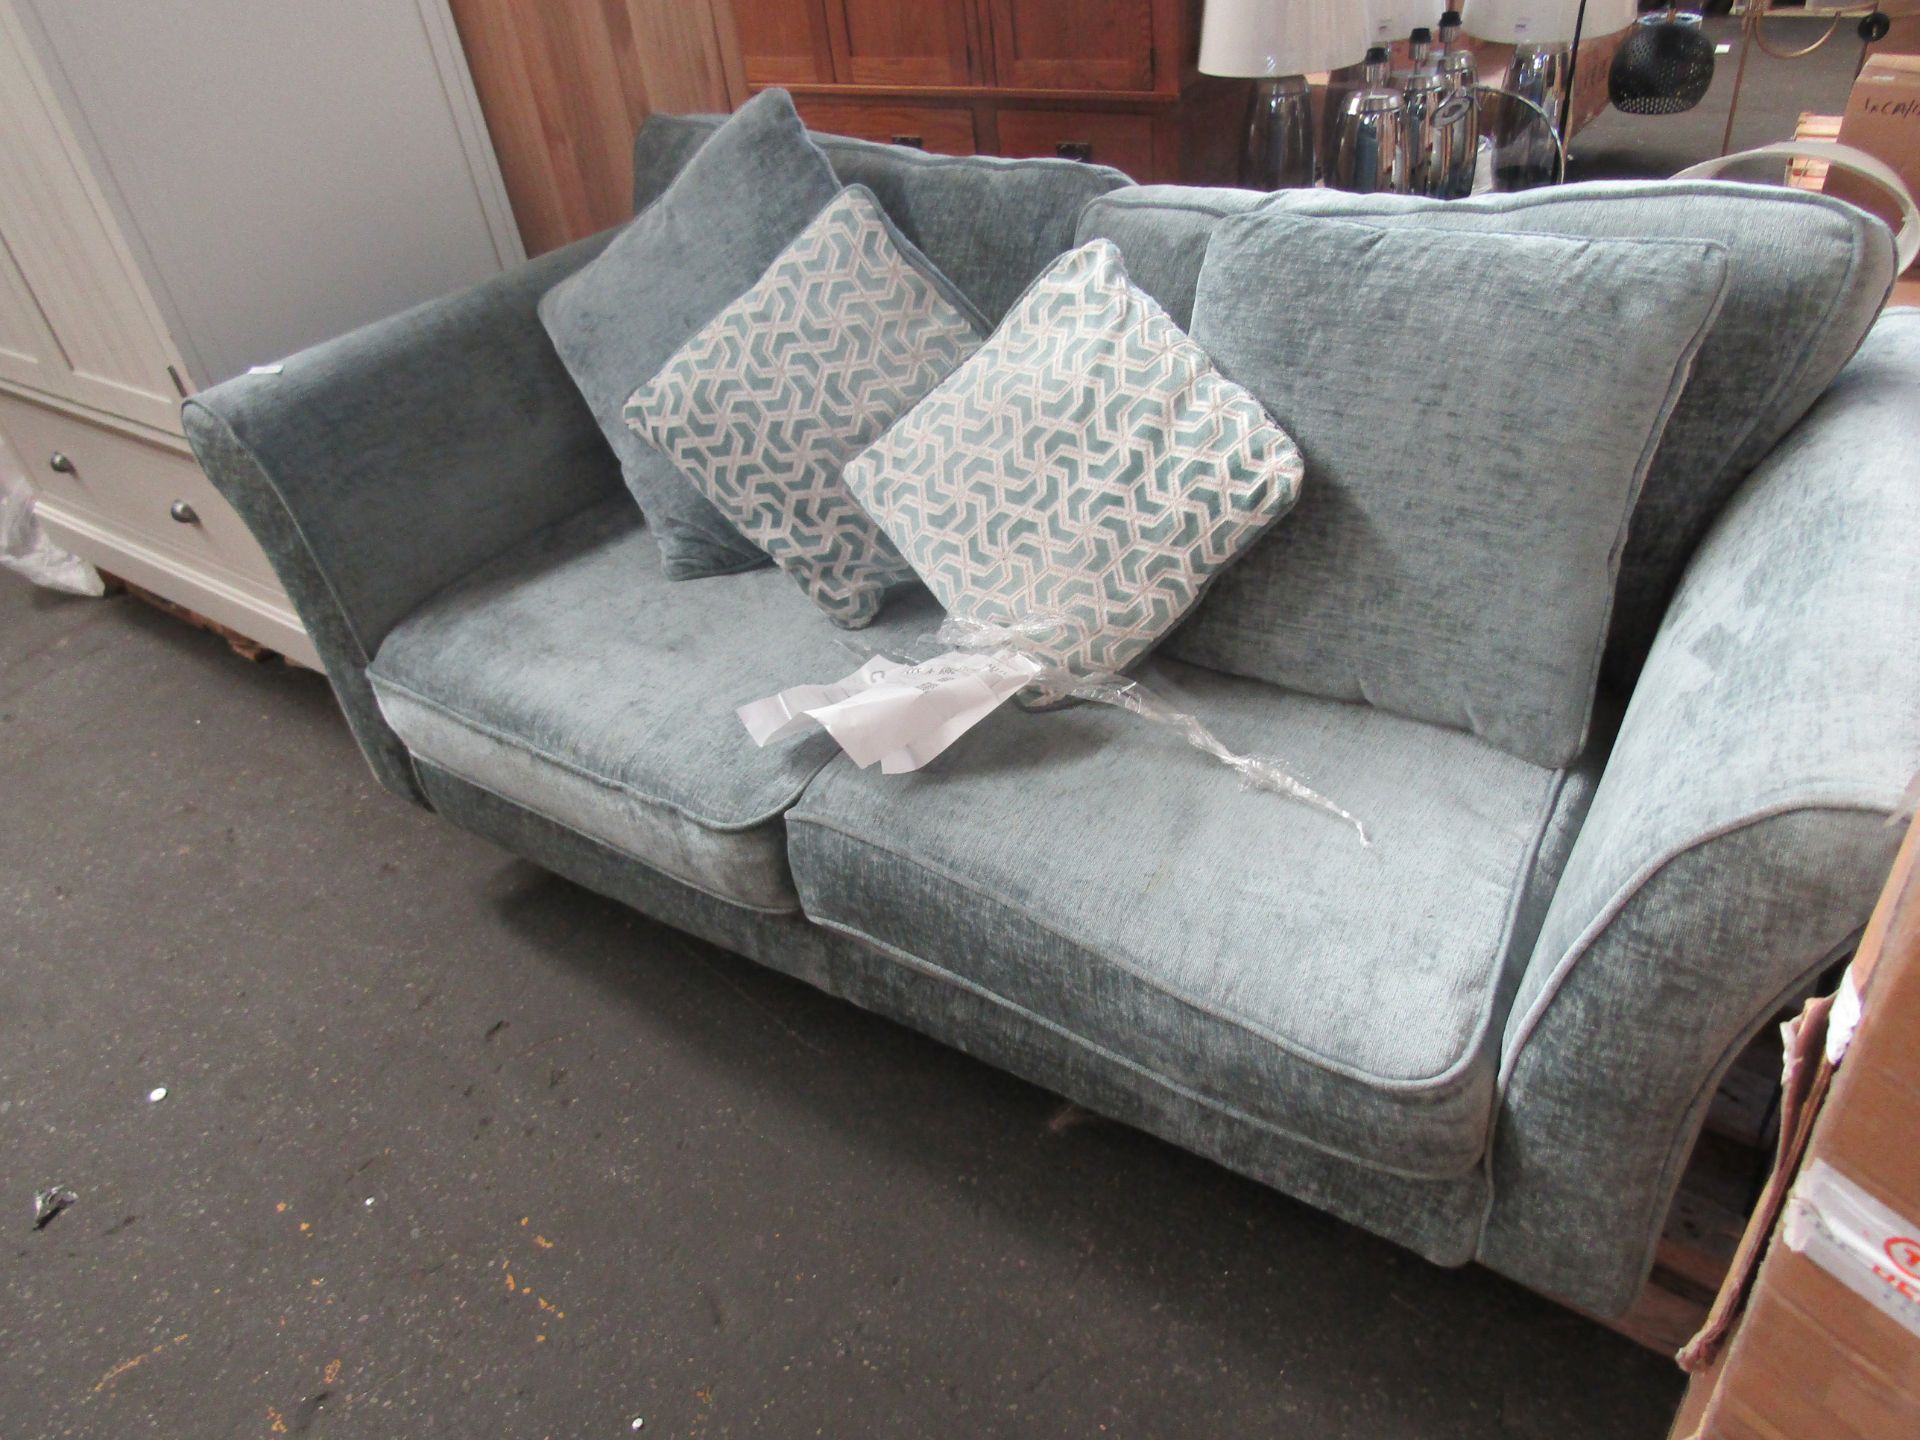 Oak Furnitureland Odette 2 Seater High Back Sofa in Adele Jade Fabric RRP 900Odette 2 Seater High